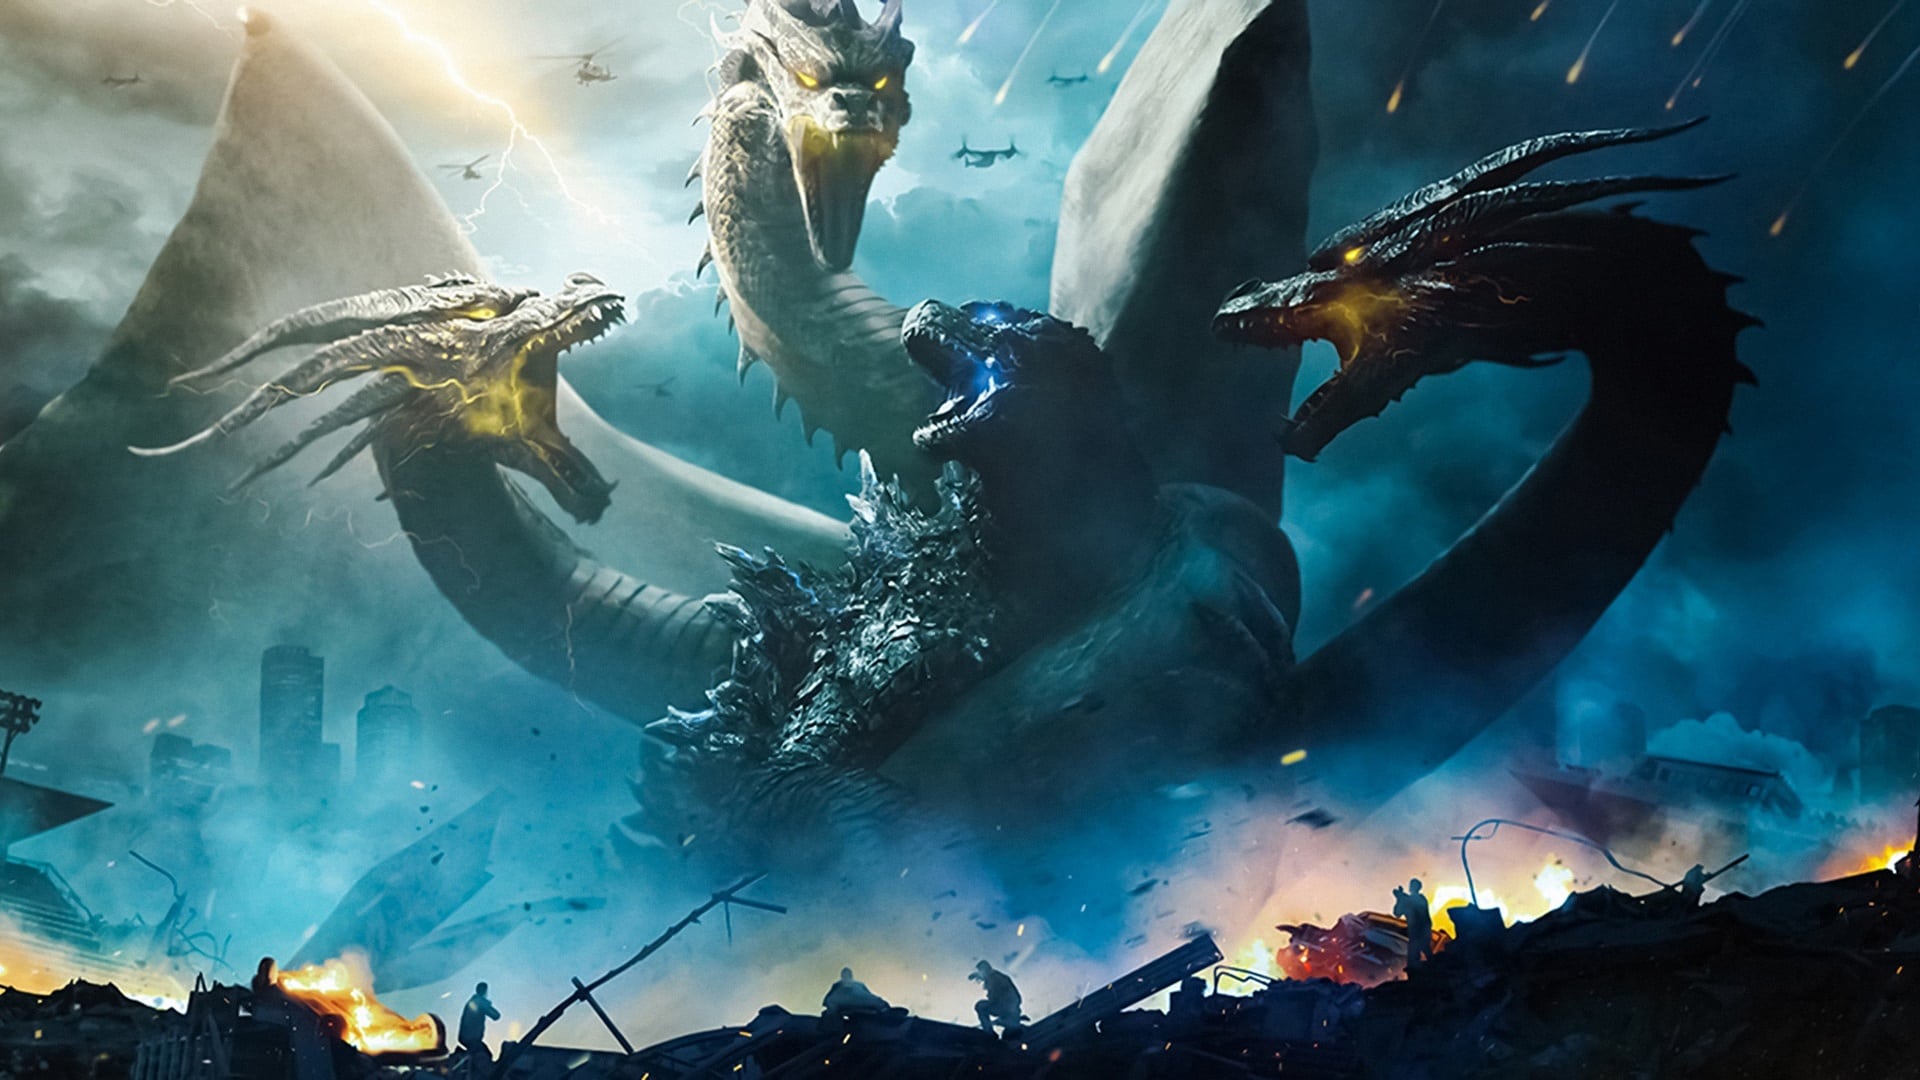 Godzilla II – King of the Monsters